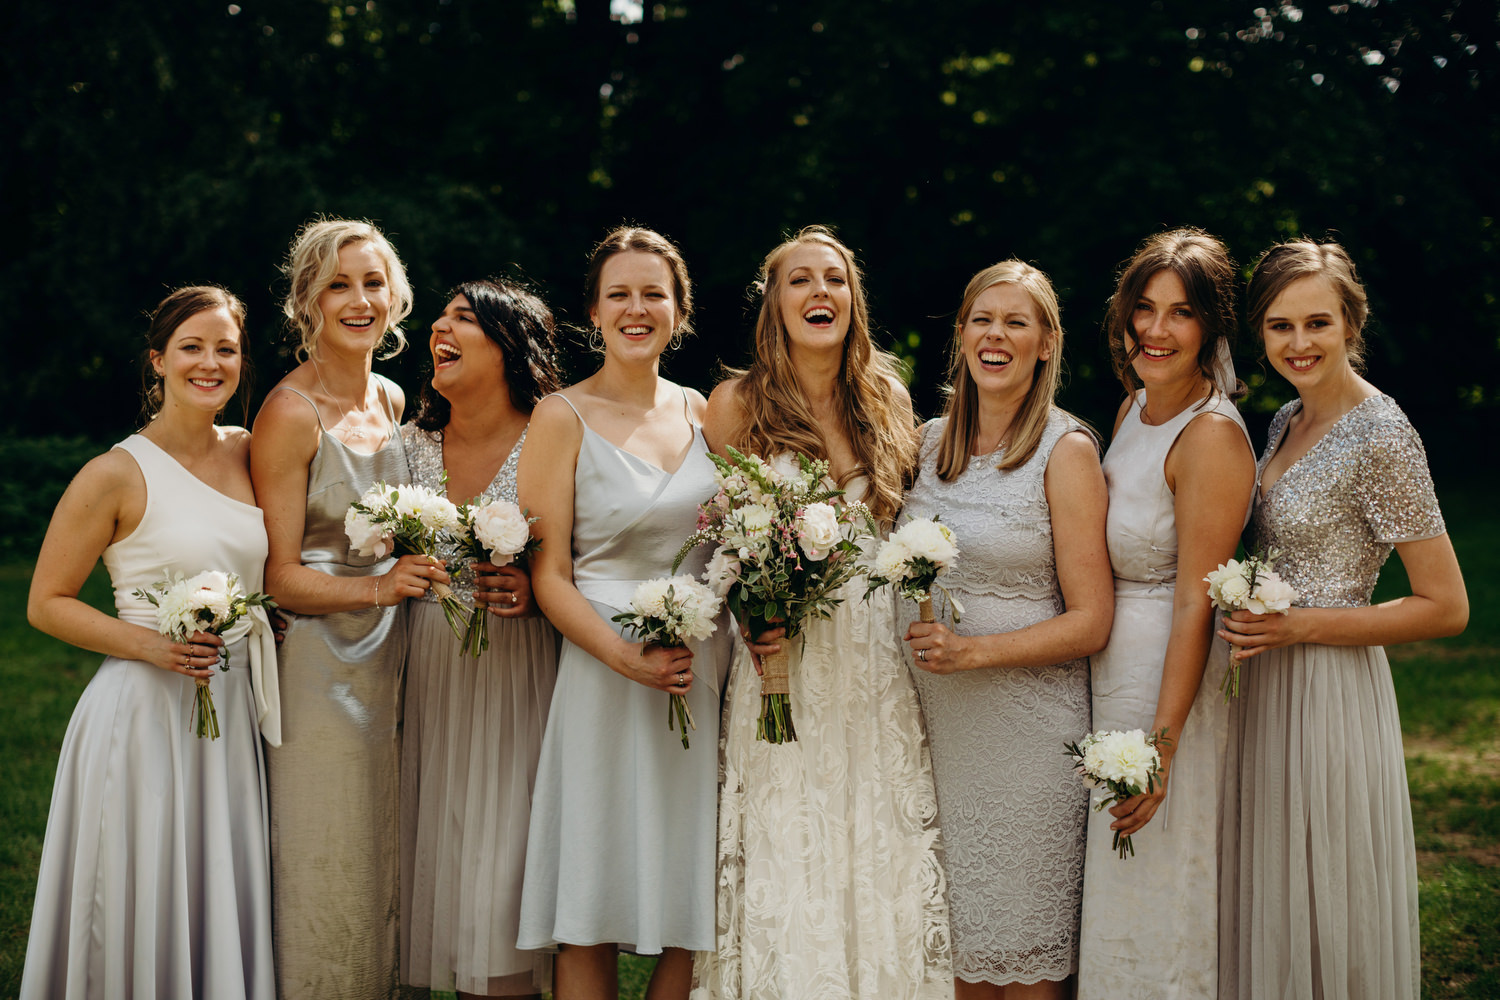 bride poses with bridesmaids at wedding